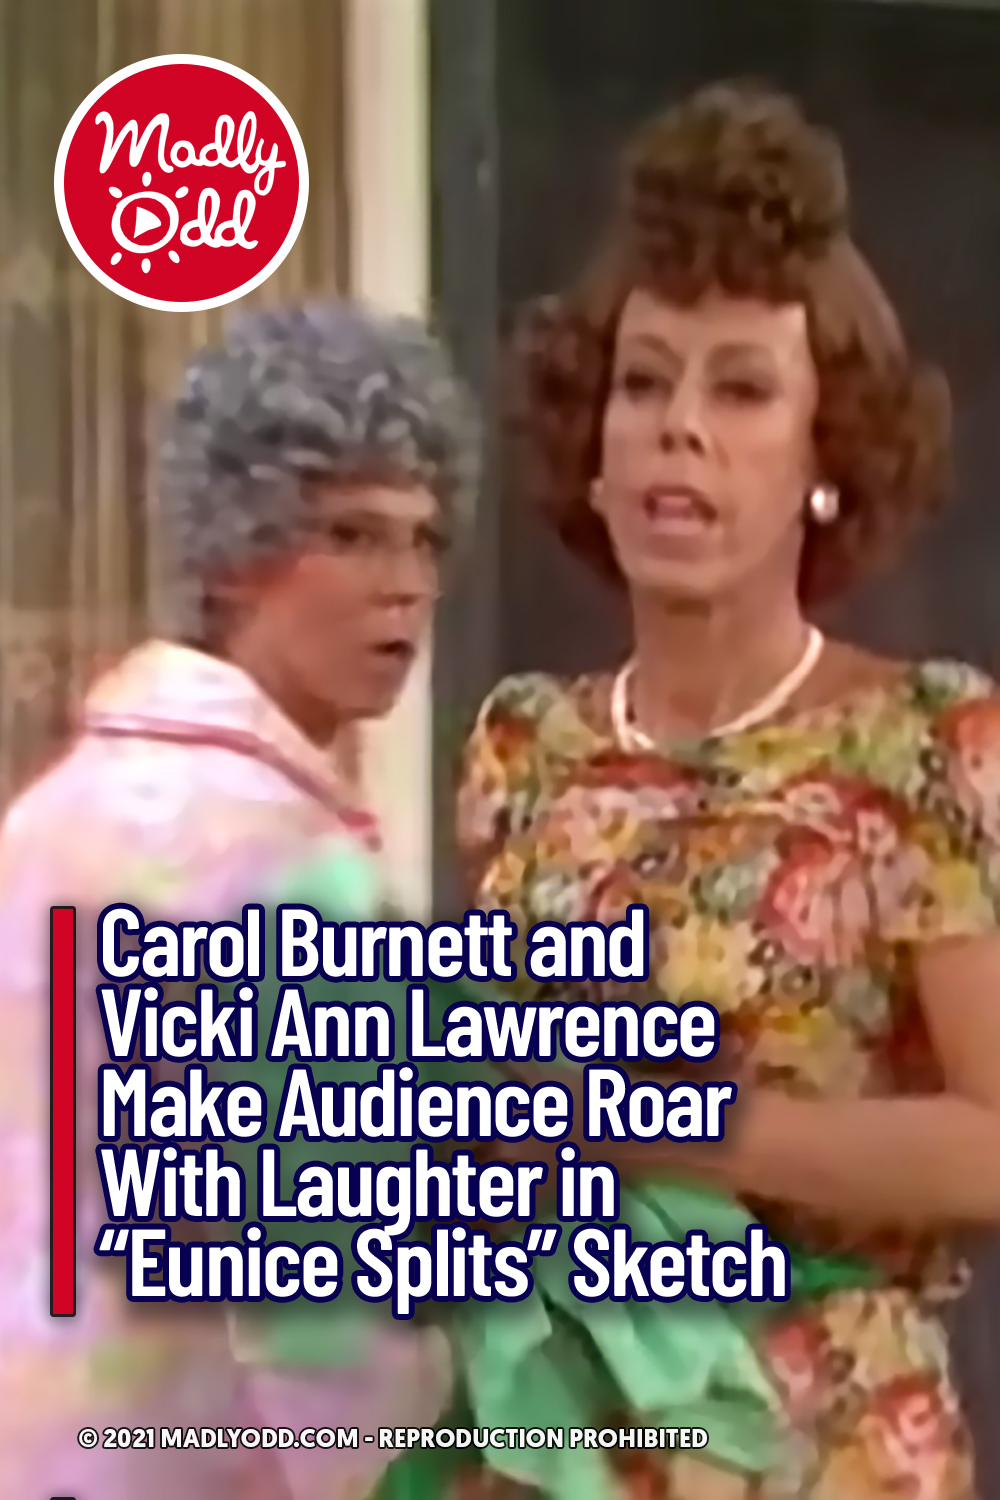 Carol Burnett and Vicki Ann Lawrence Make Audience Roar With Laughter in “Eunice Splits” Sketch